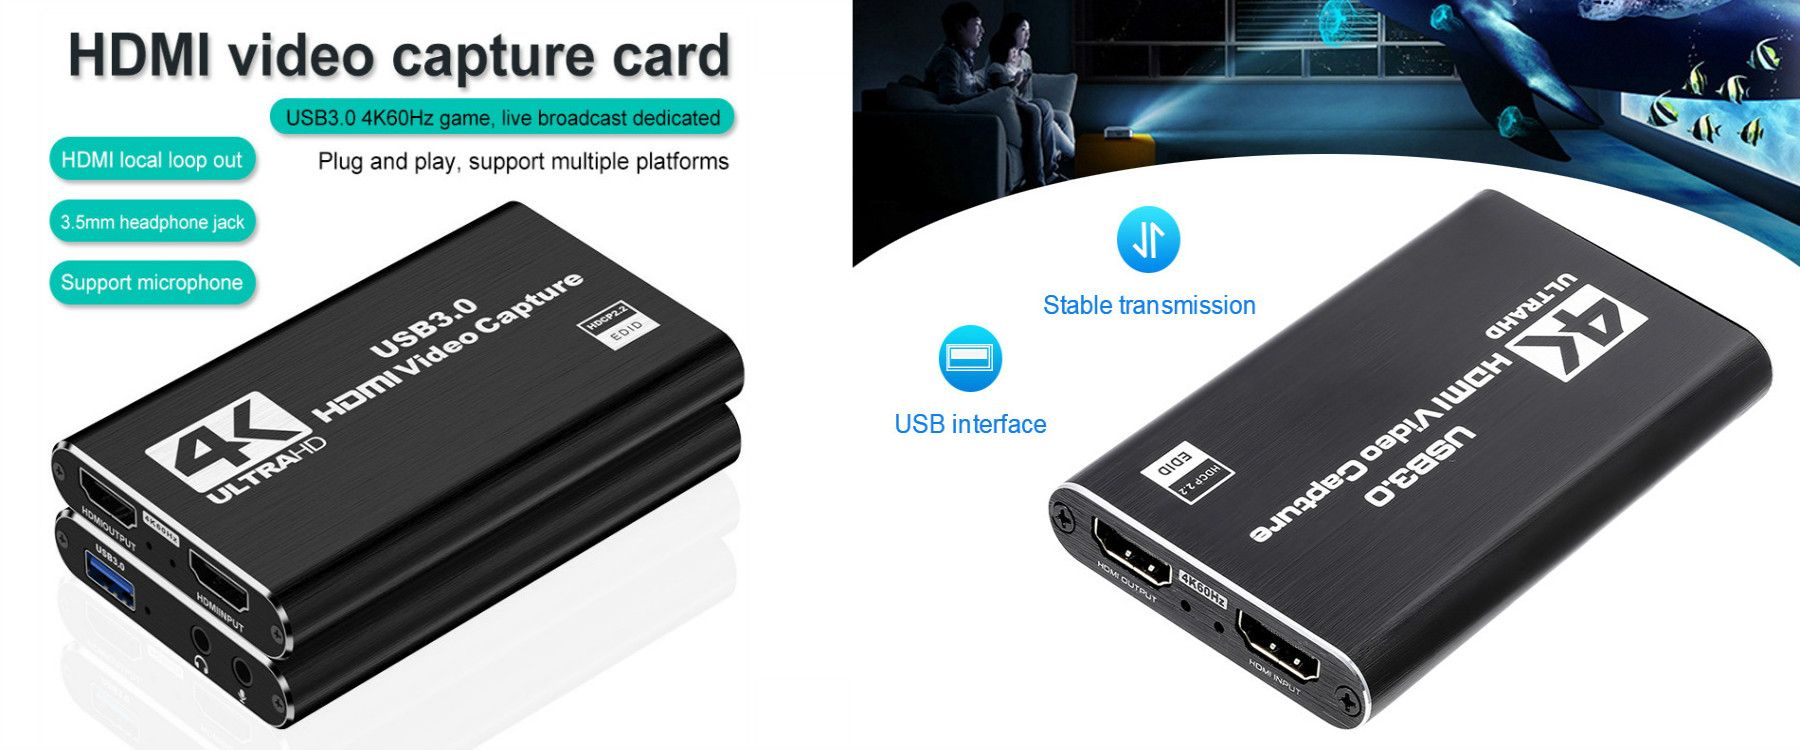 USB 3.0 Video capture card